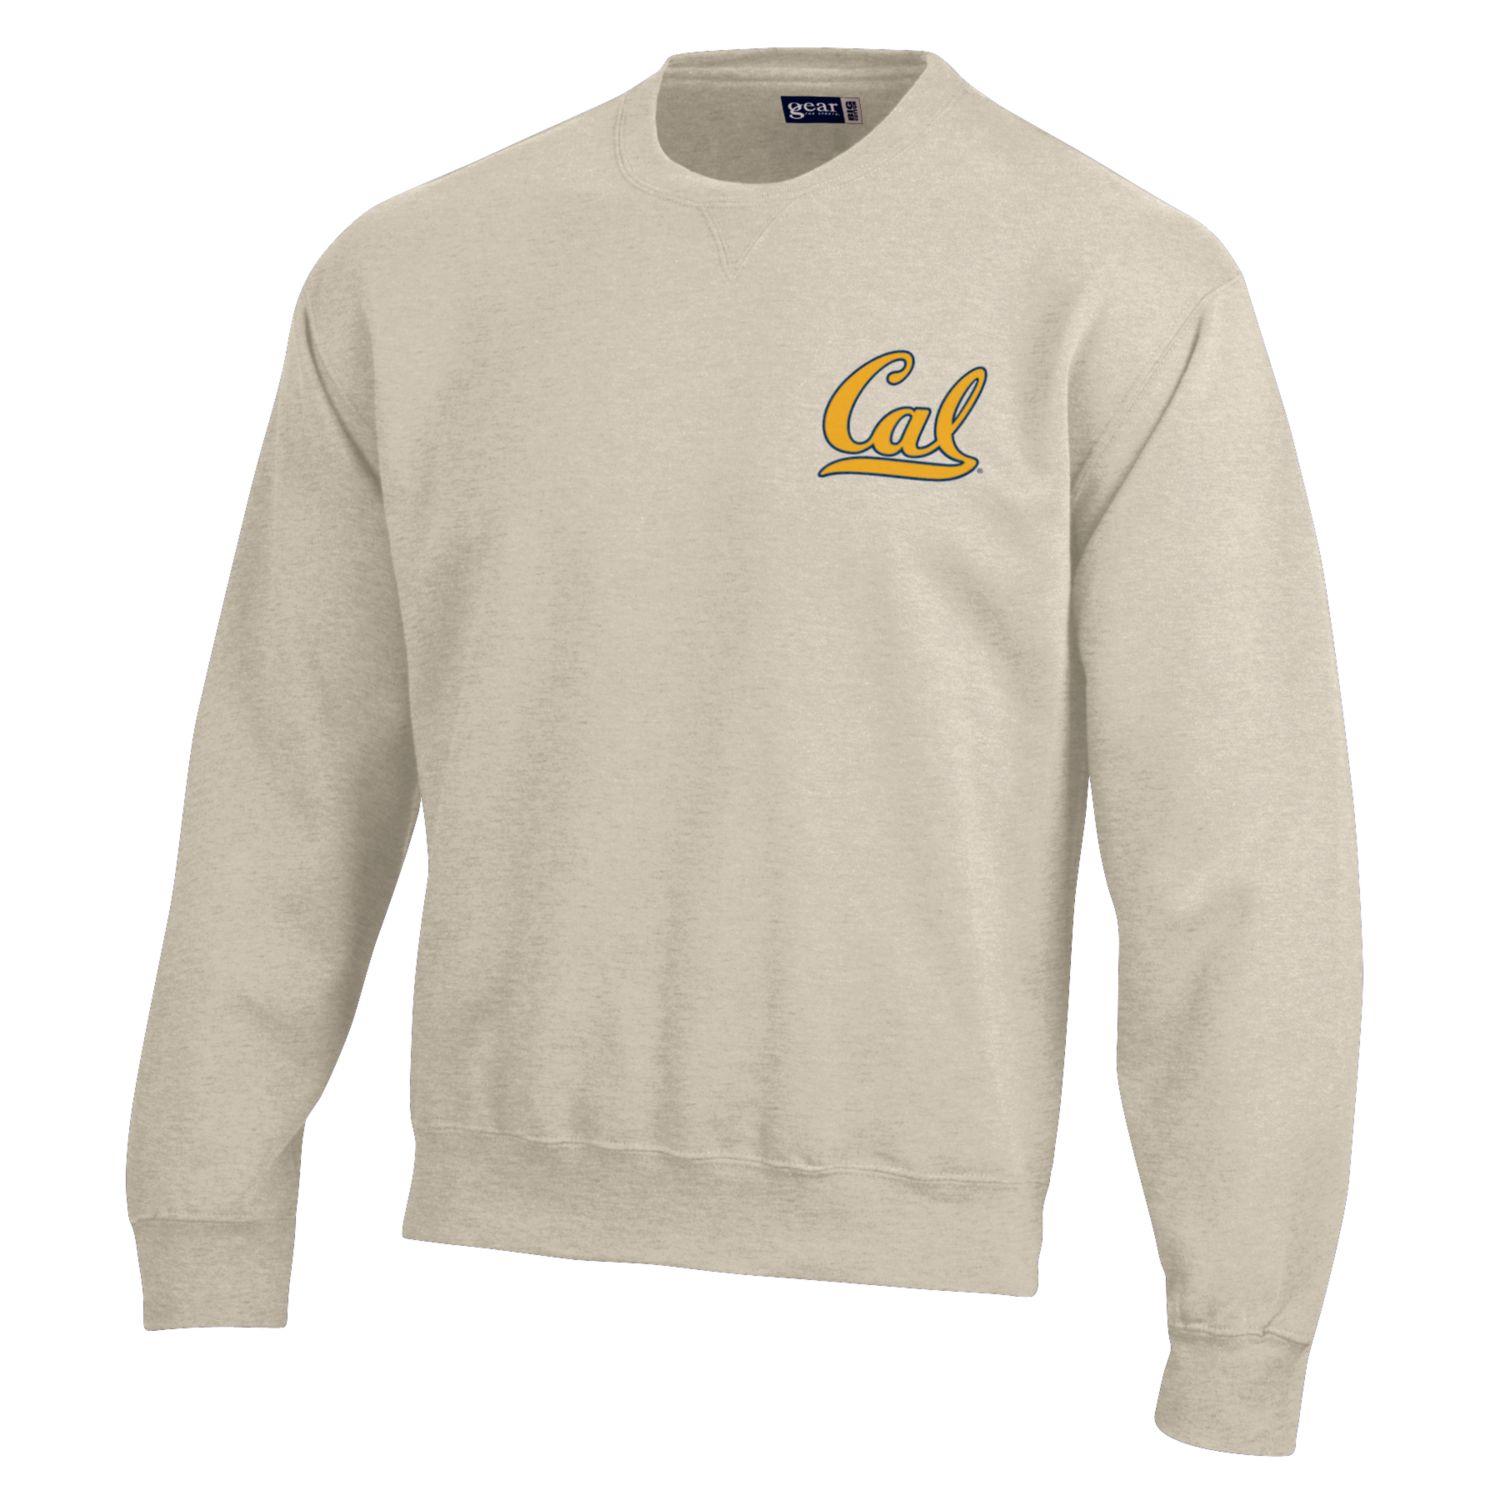 U.C. Berkeley Cal left chest cotton rich crew-neck sweatshirt-Oatmeal-Shop College Wear